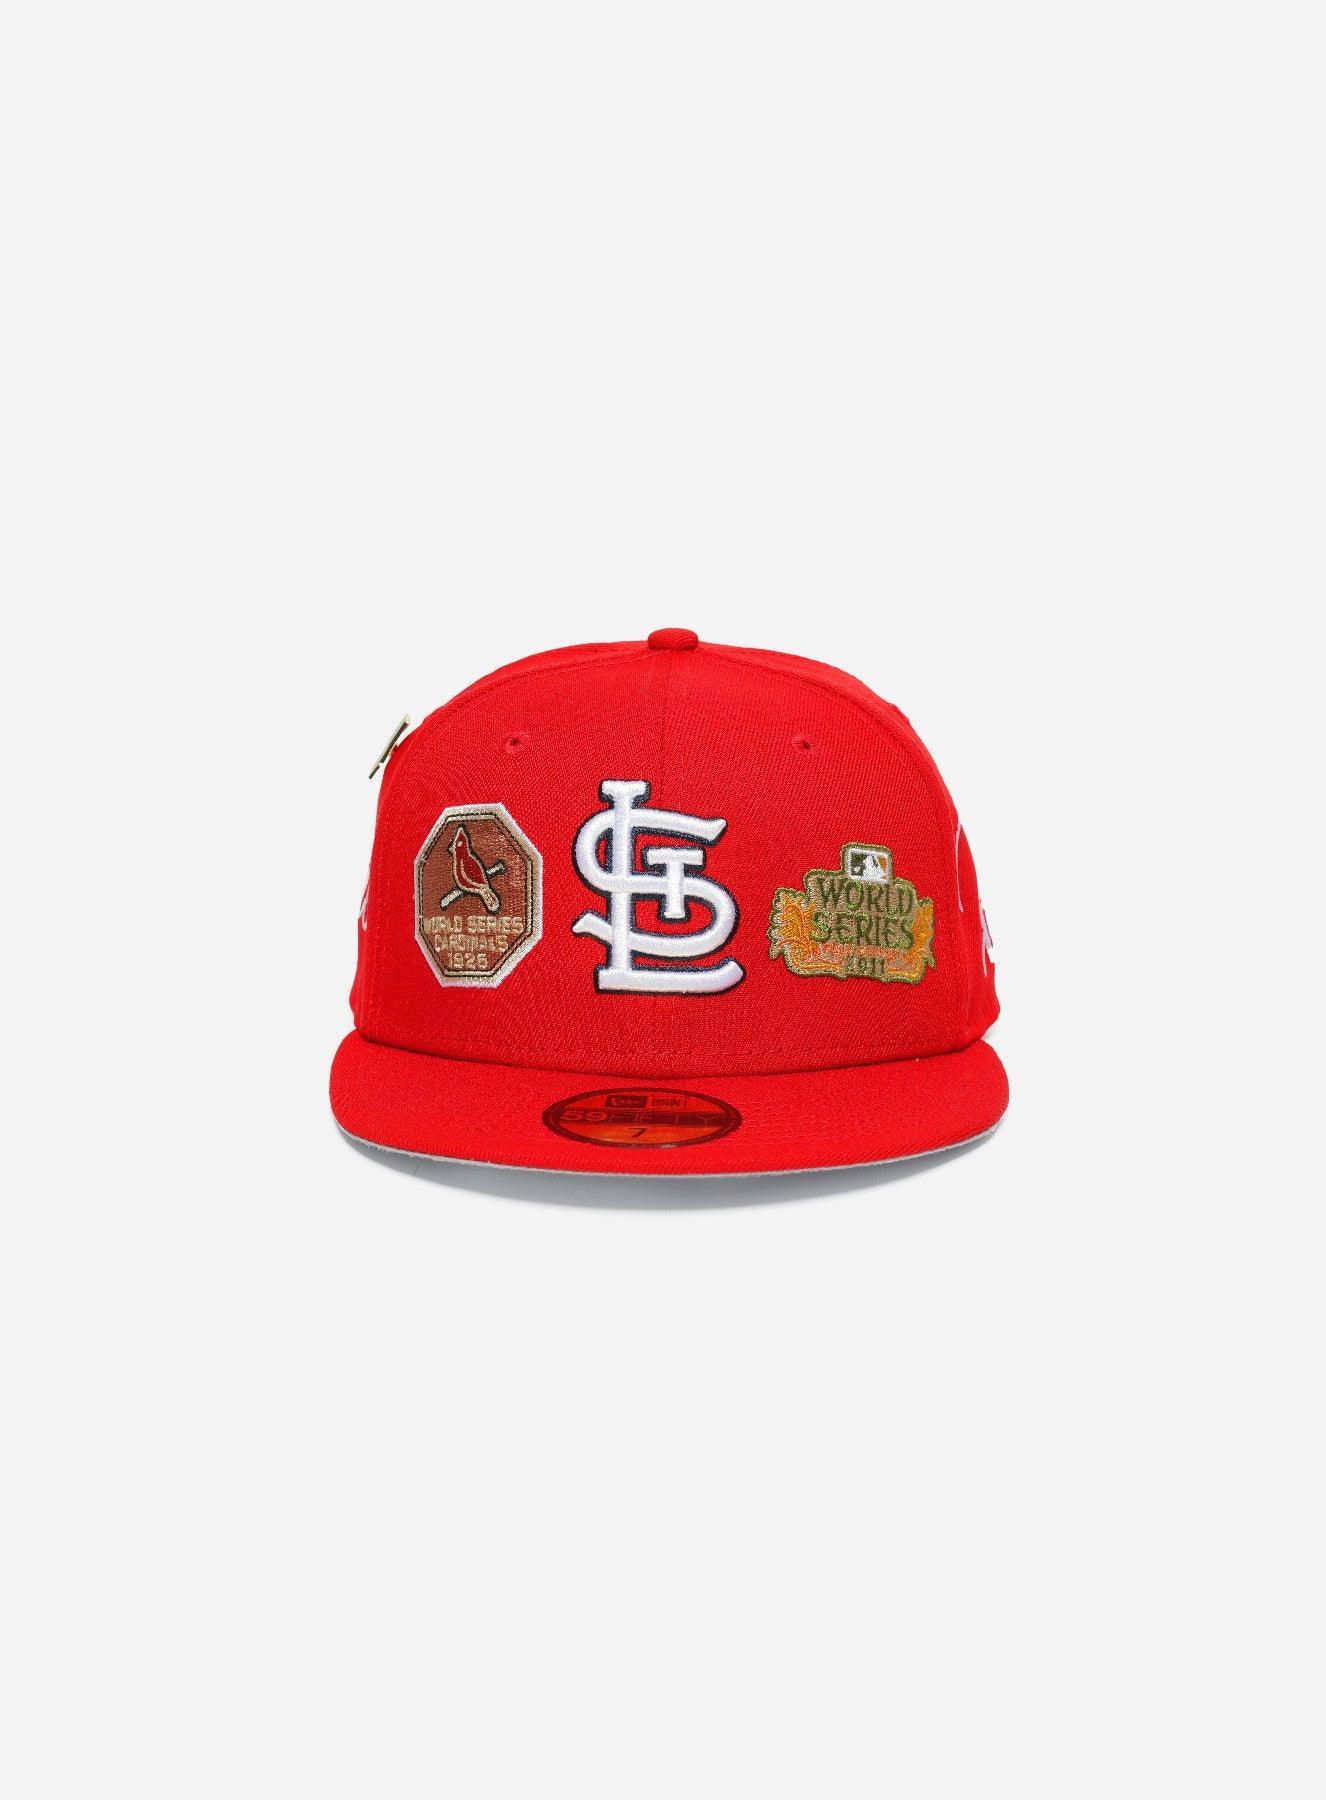 saint louis cardinals baseball hats